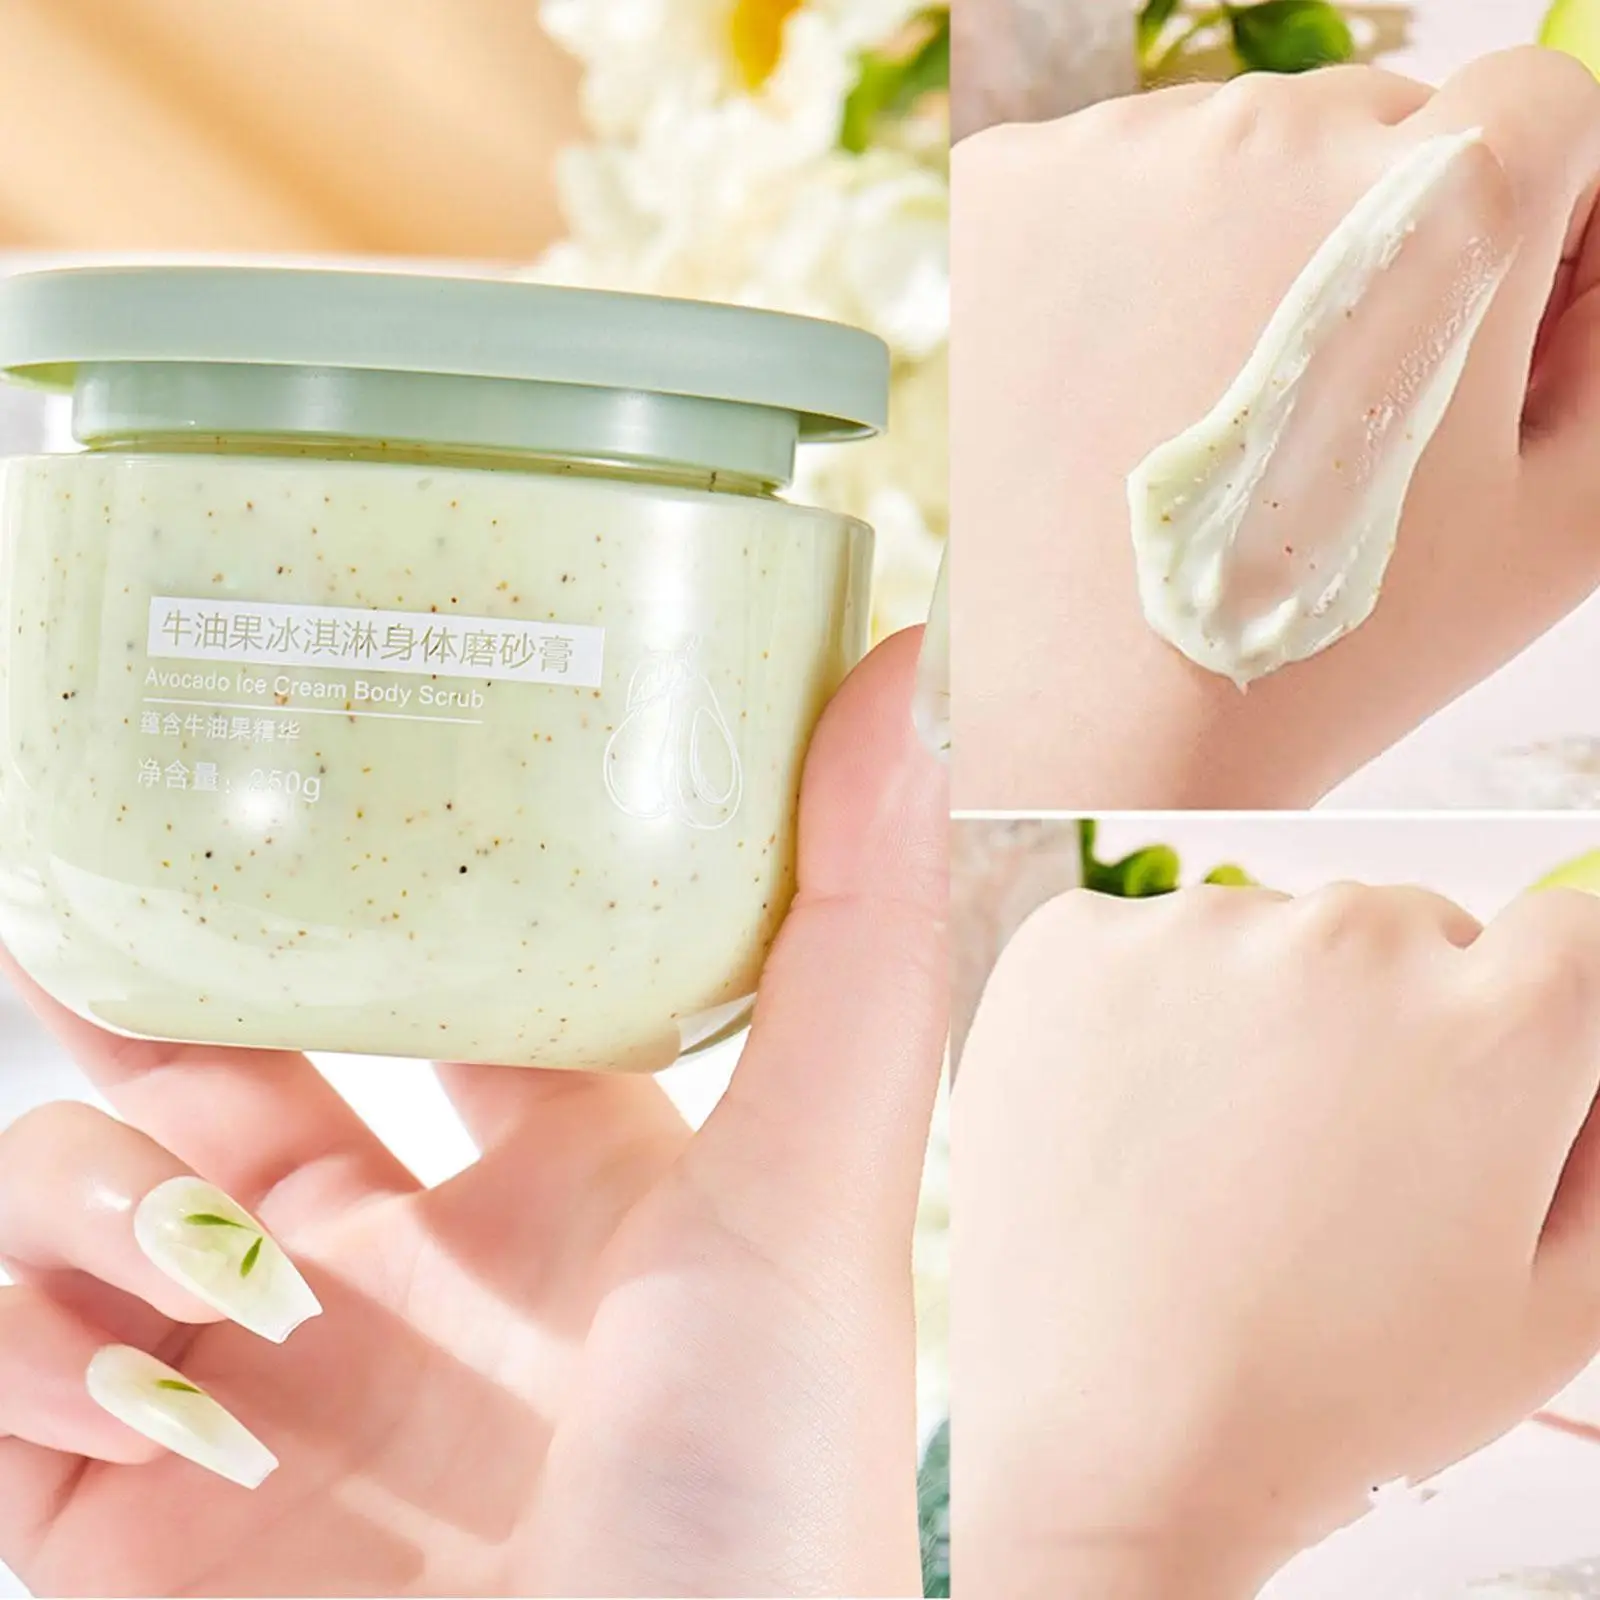 

250g Avocado Body Scrub Exfoliating Deep Cleansing Mud Body Treatment Acne Cleaning Pore Products Women B7x7